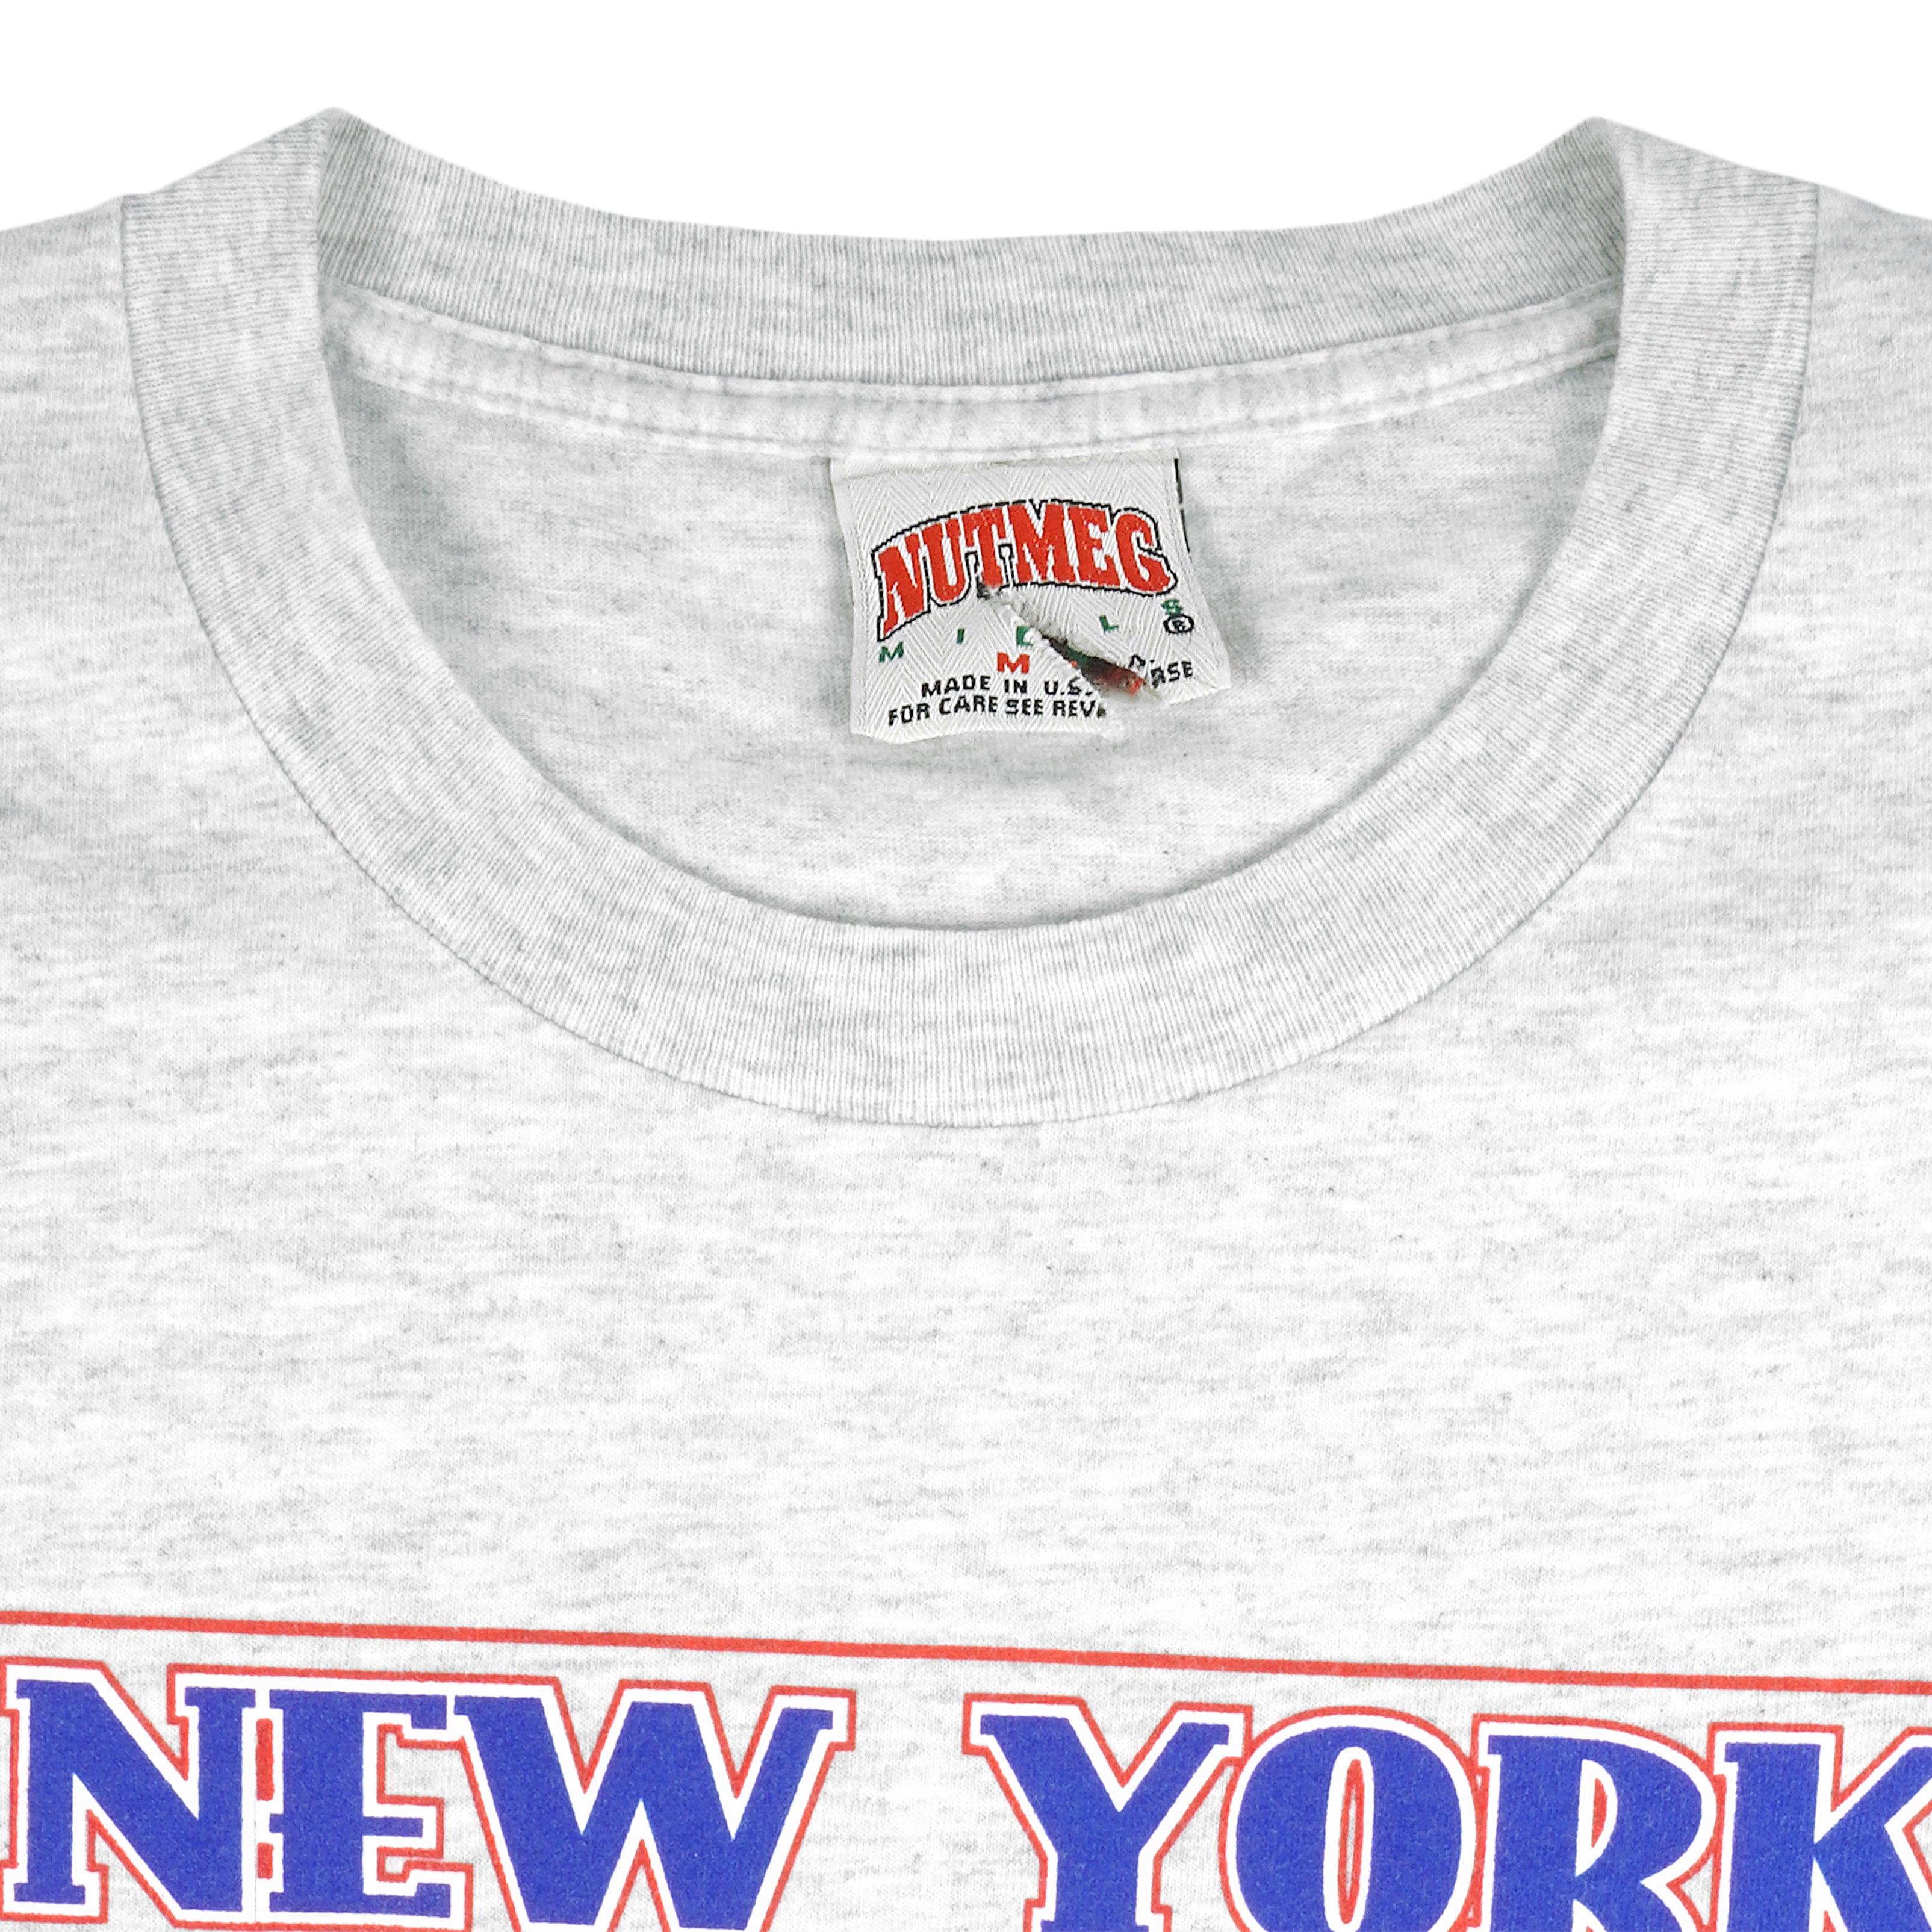 Vintage NHL (Nutmeg) - New York Rangers Stanley Cup Champions T